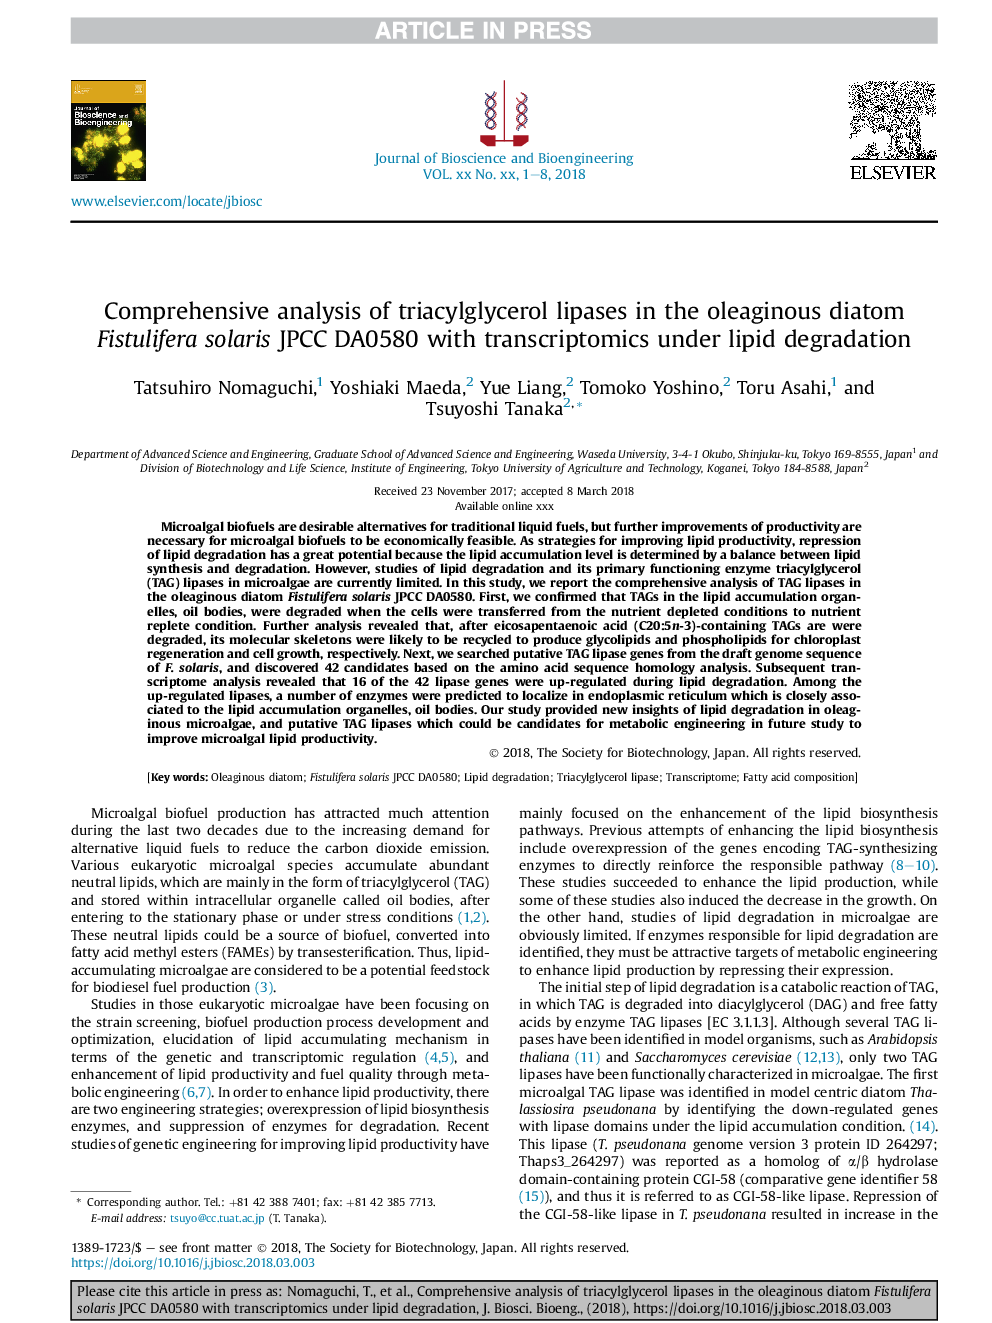 Comprehensive analysis of triacylglycerol lipases in the oleaginous diatom Fistulifera solaris JPCC DA0580 with transcriptomics under lipid degradation